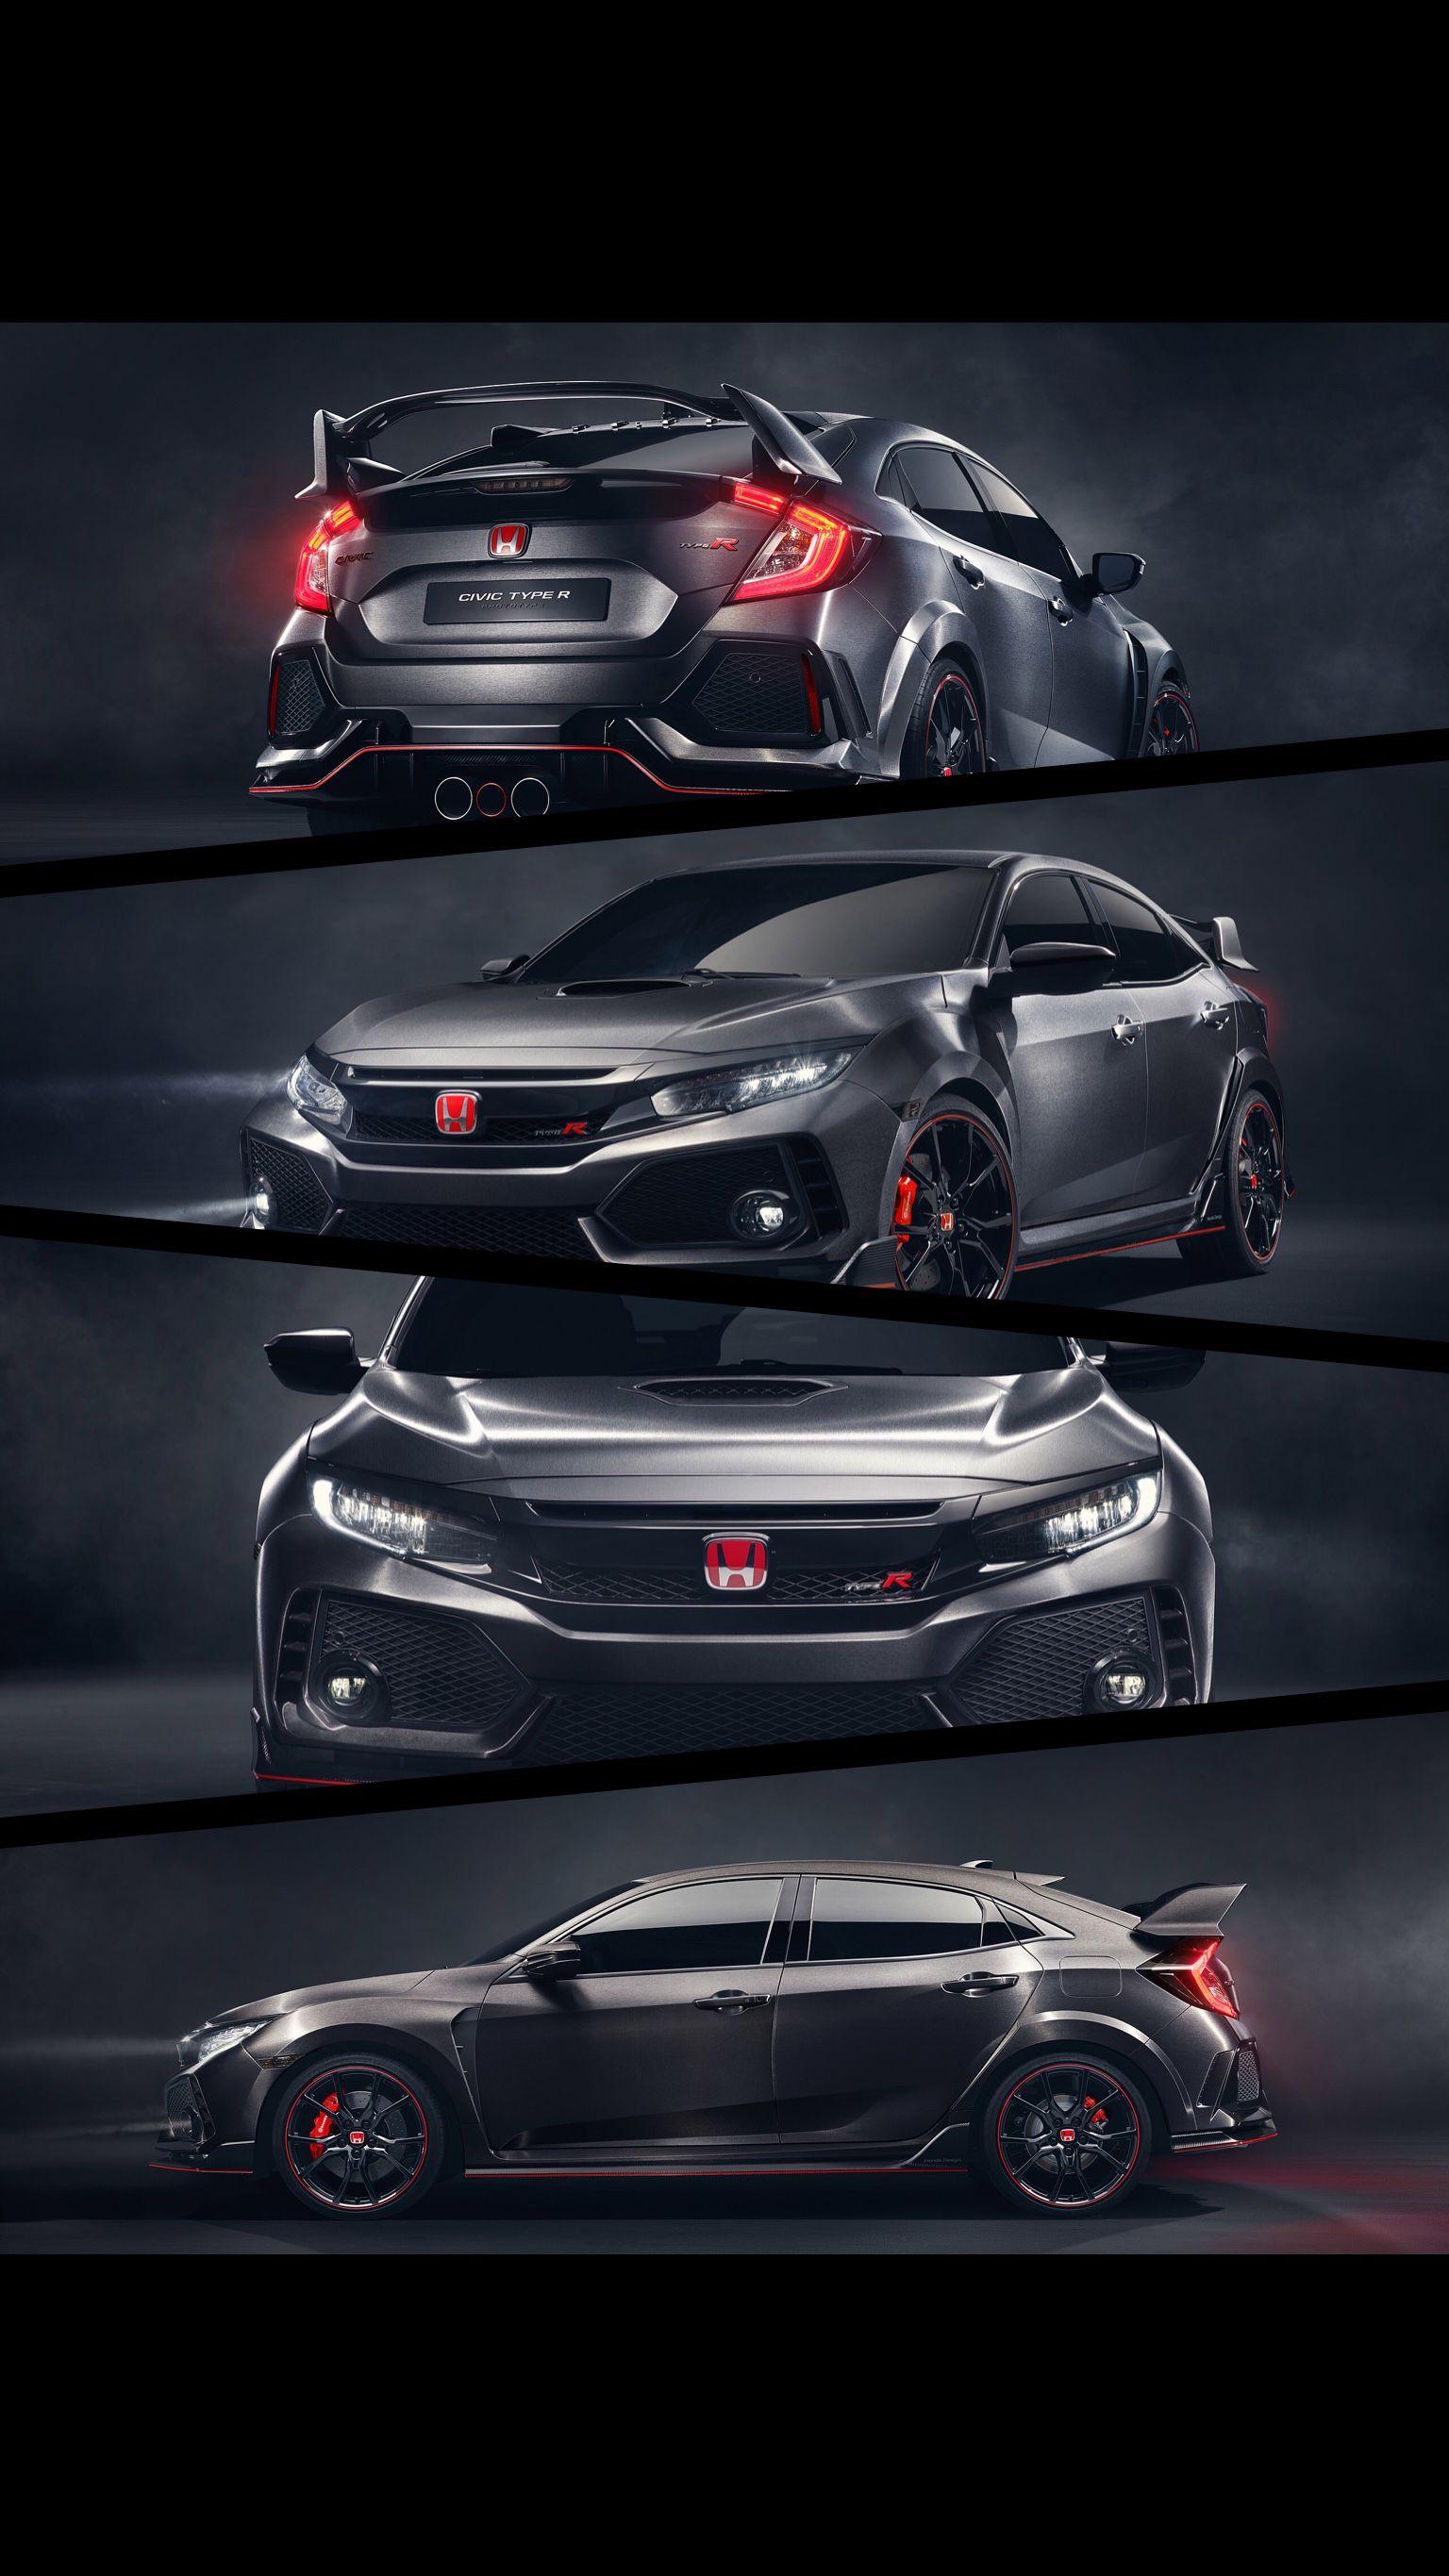 Honda Civic Type R Wallpapers Top Free Honda Civic Type R Backgrounds Wallpaperaccess